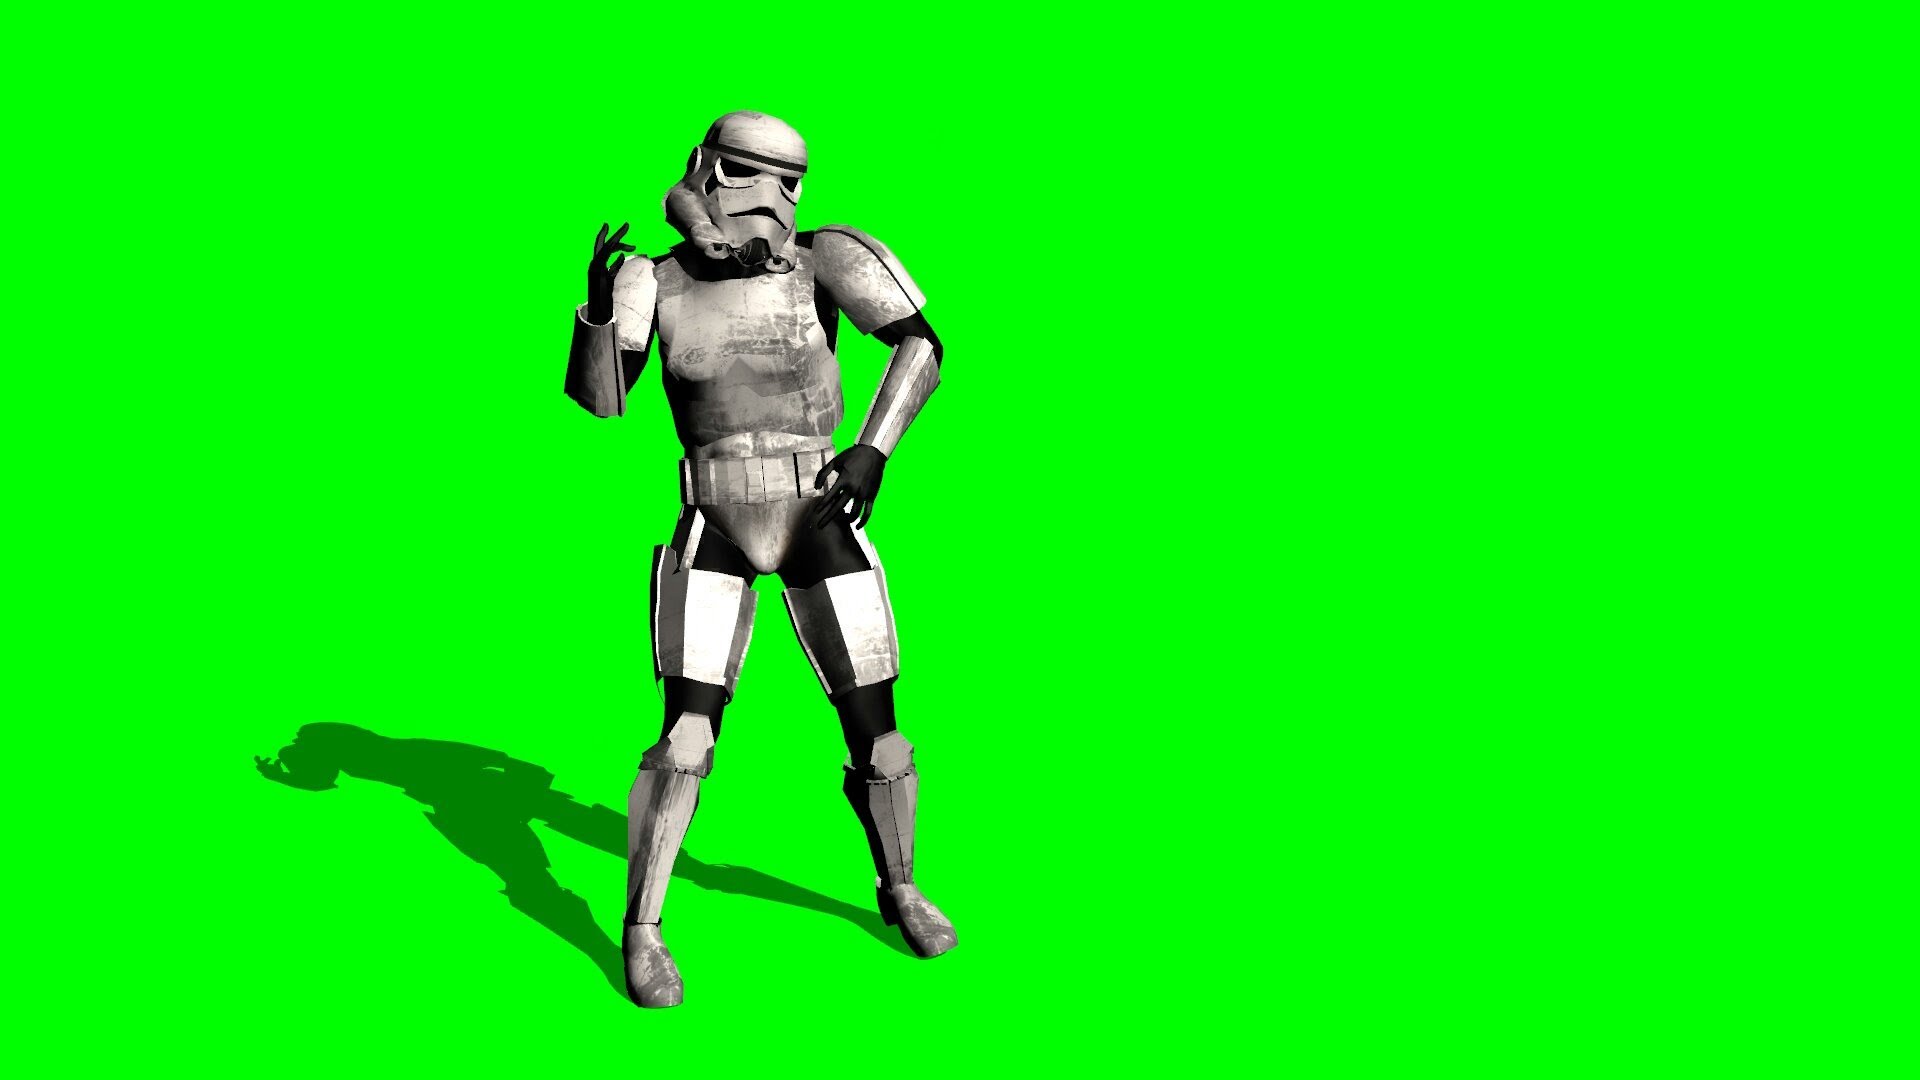 Star Wars Dancing Storm Trooper On Green Screen